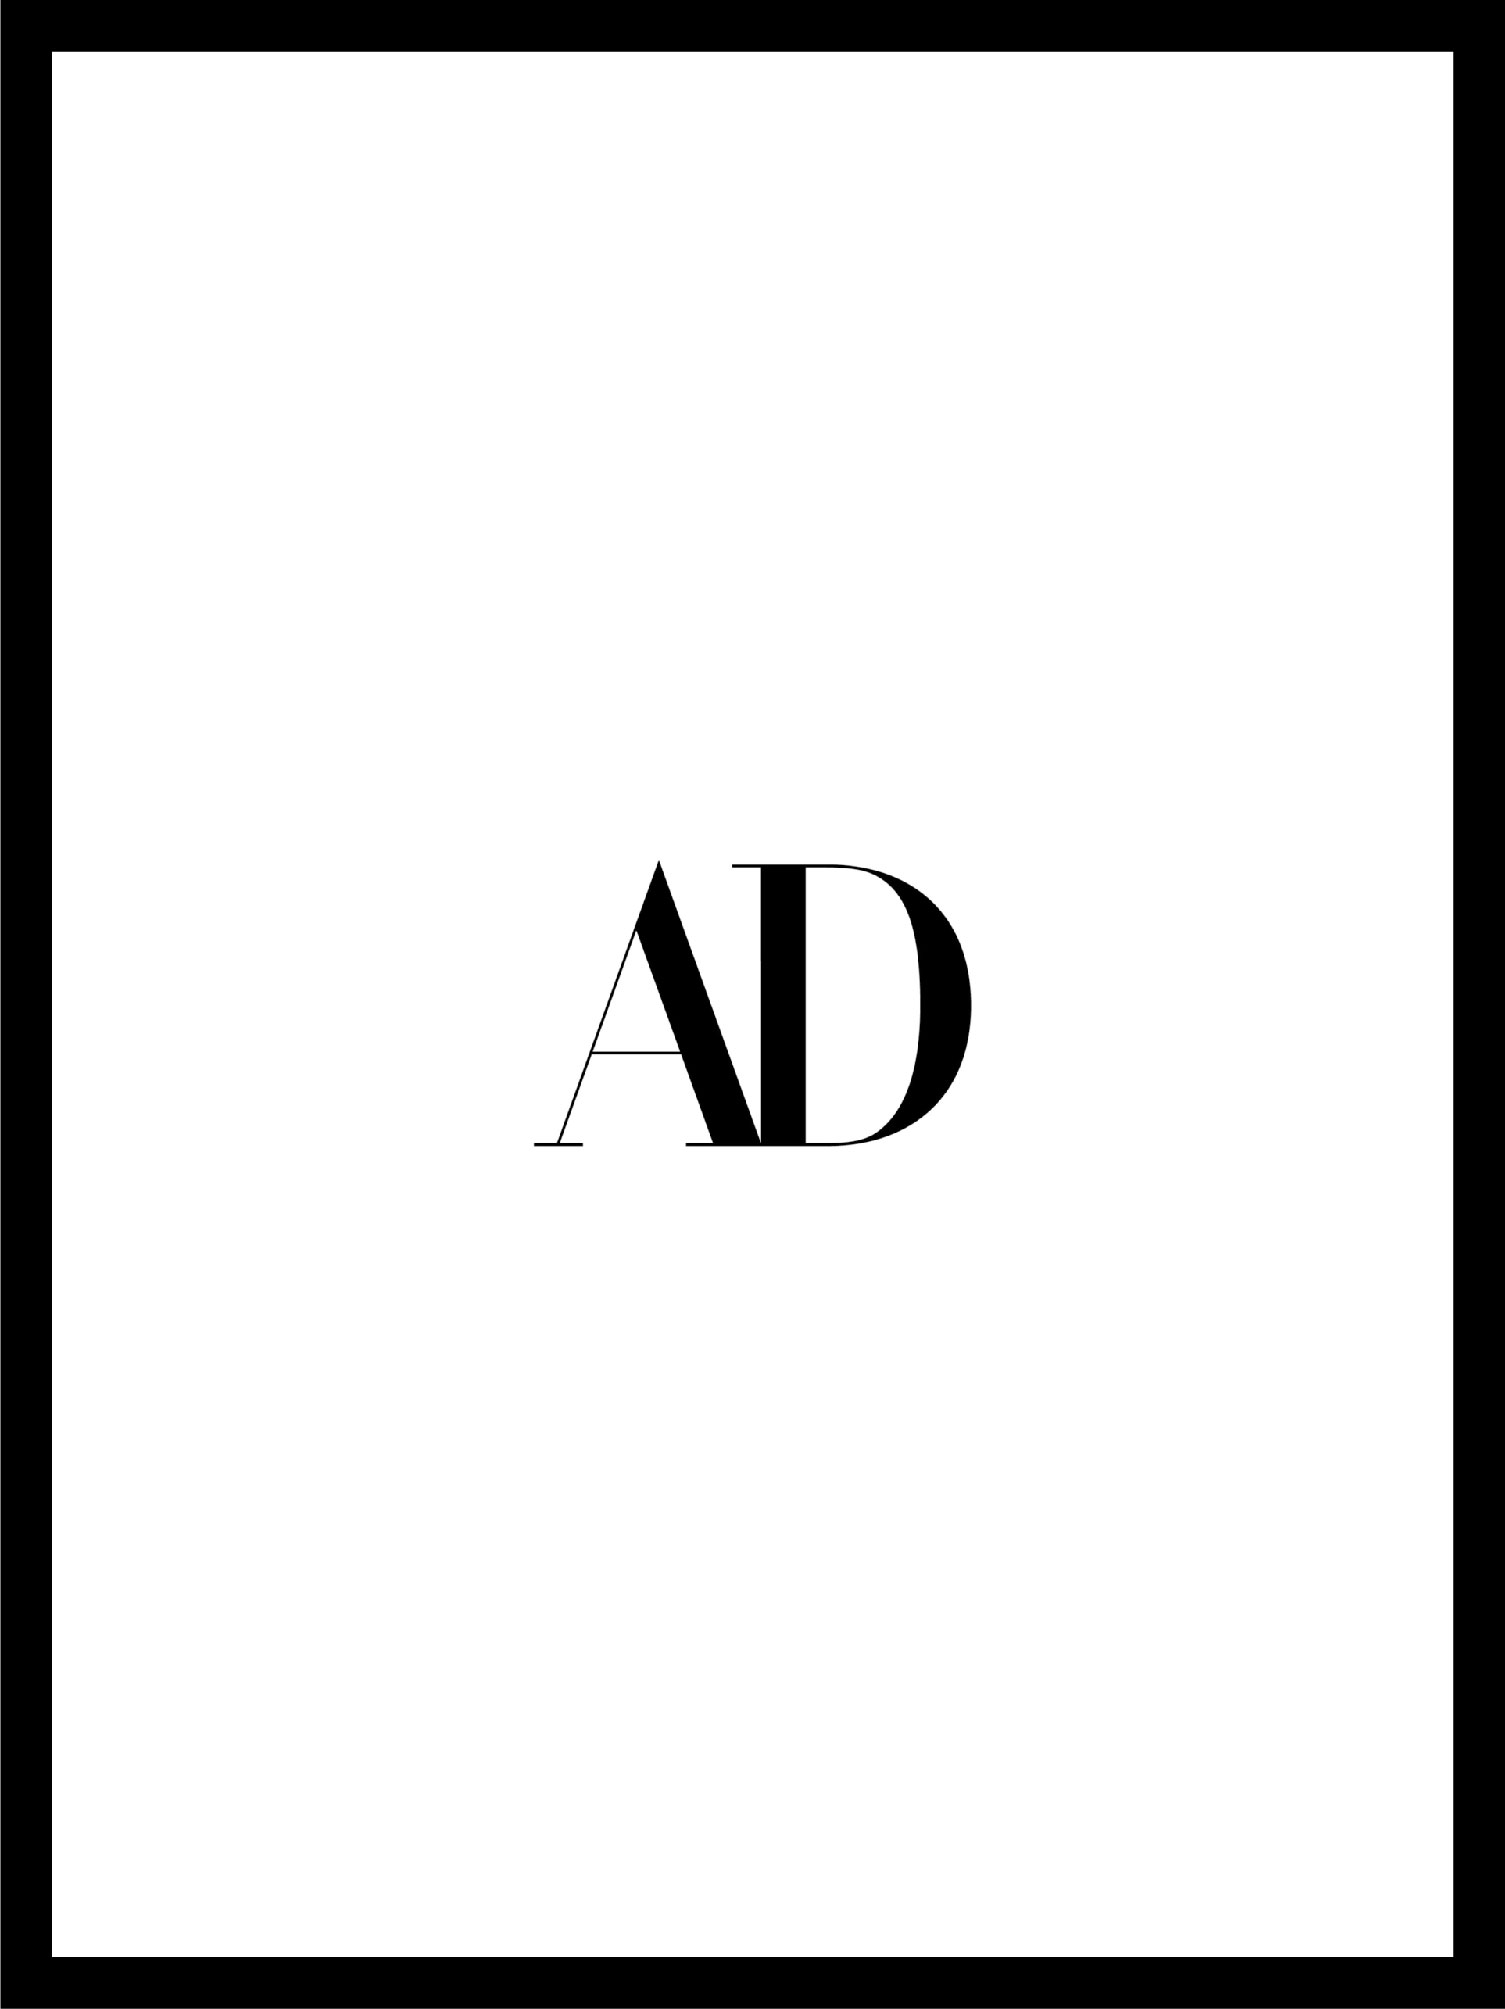 logo of the magazine AD